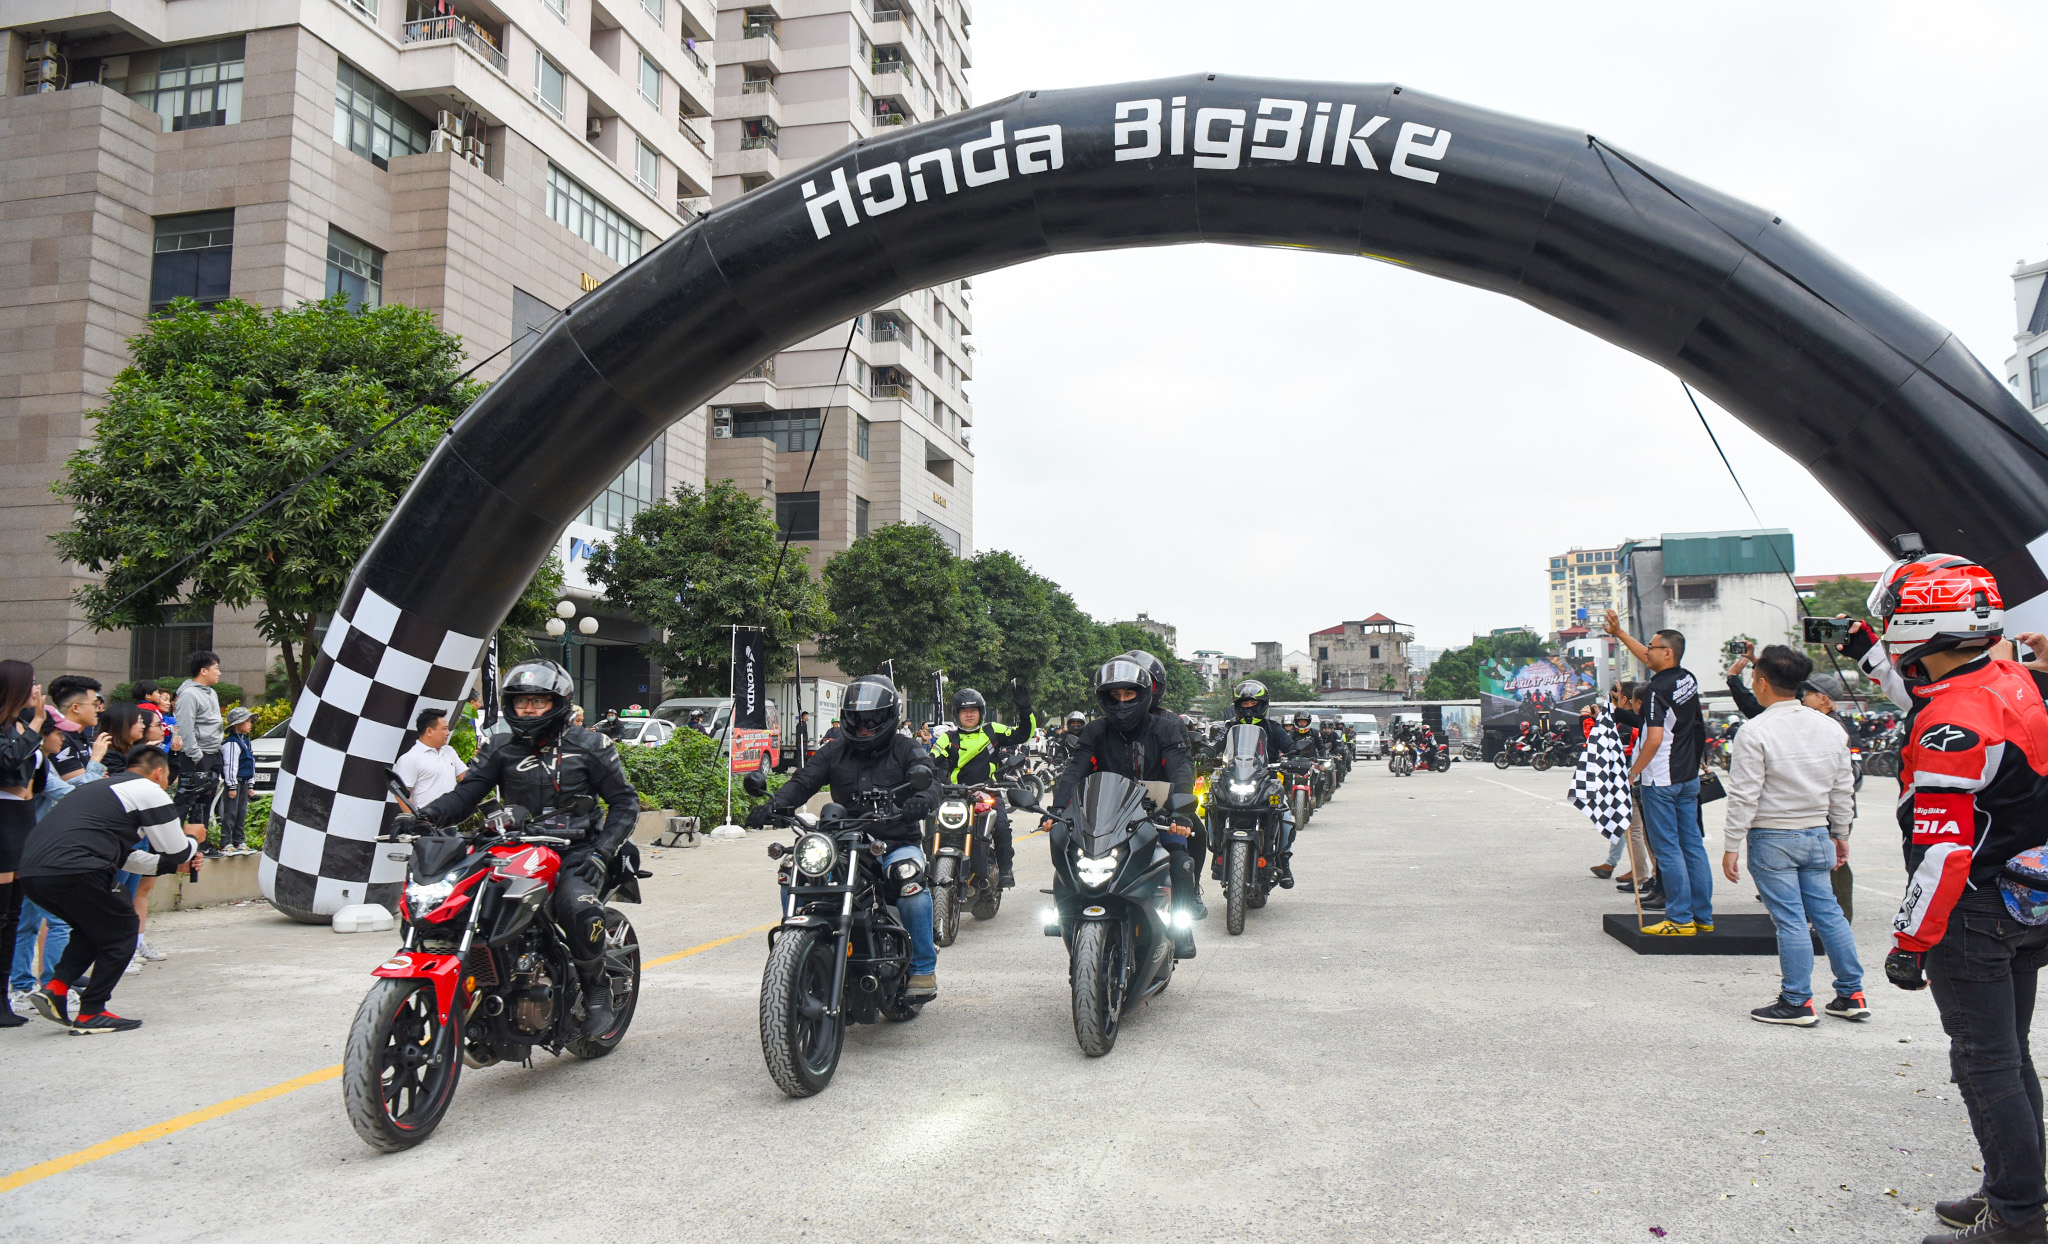 Honda Biker Day 2020: Kết nối những trái tim đam mê xe PKL dsc-2660-copy.jpg